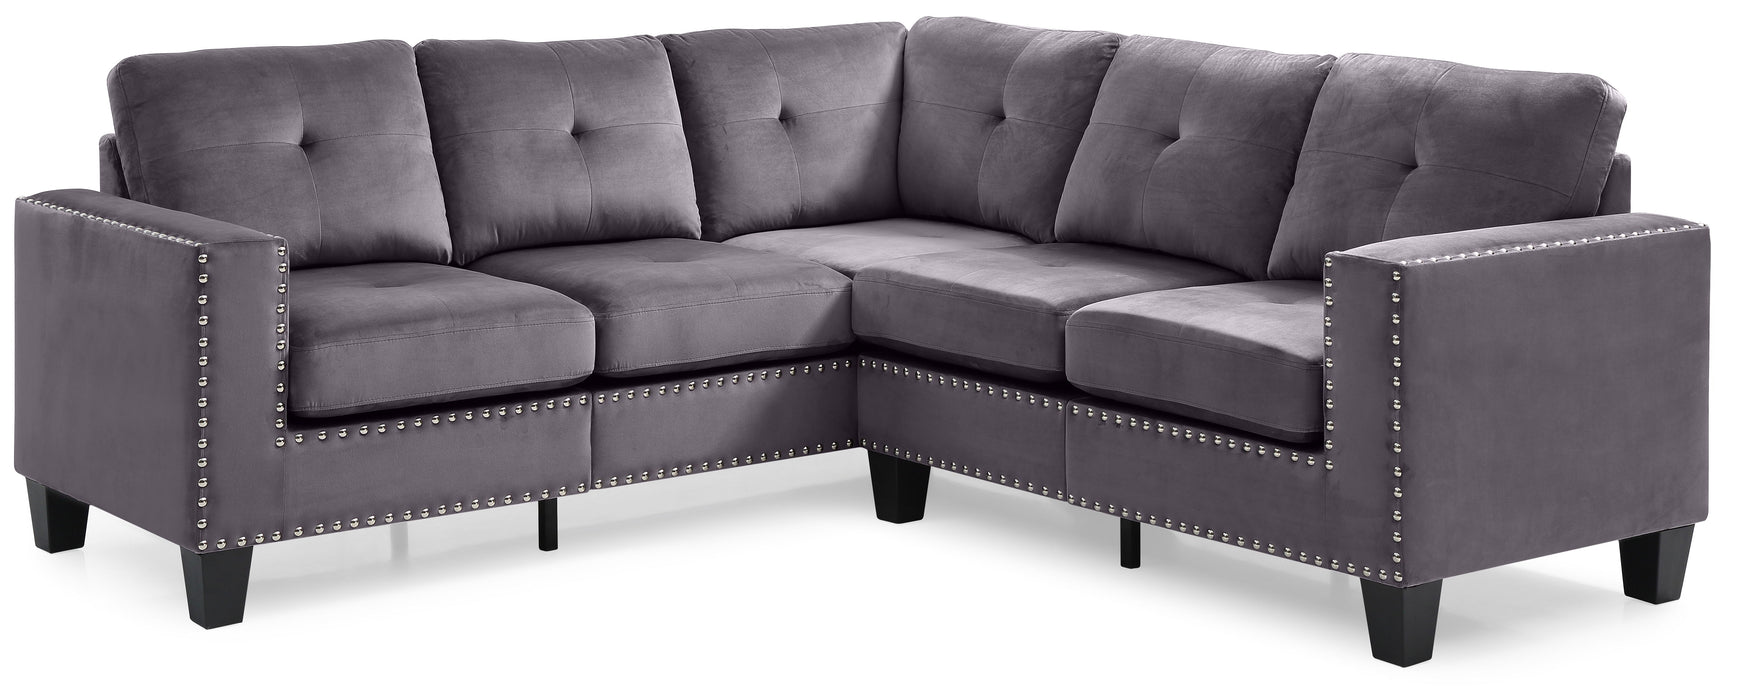 Glory Furniture Nailer Sectional, Gray